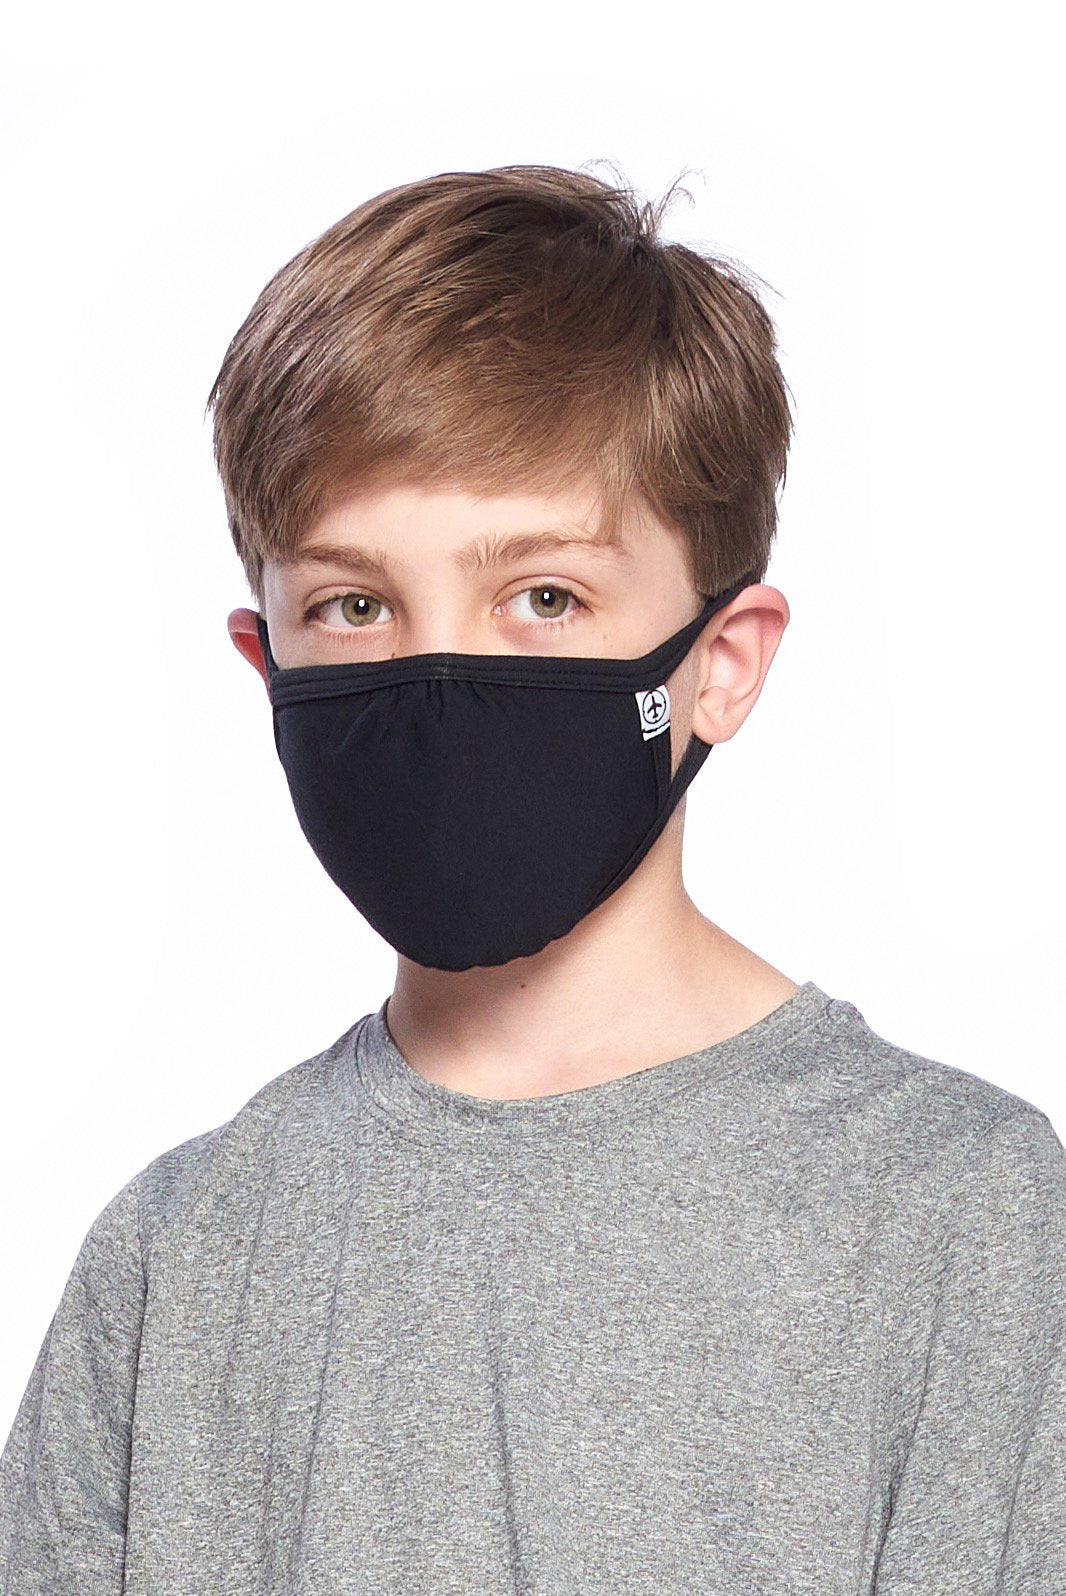 Kids Premium Protective Mask - 3 Pack